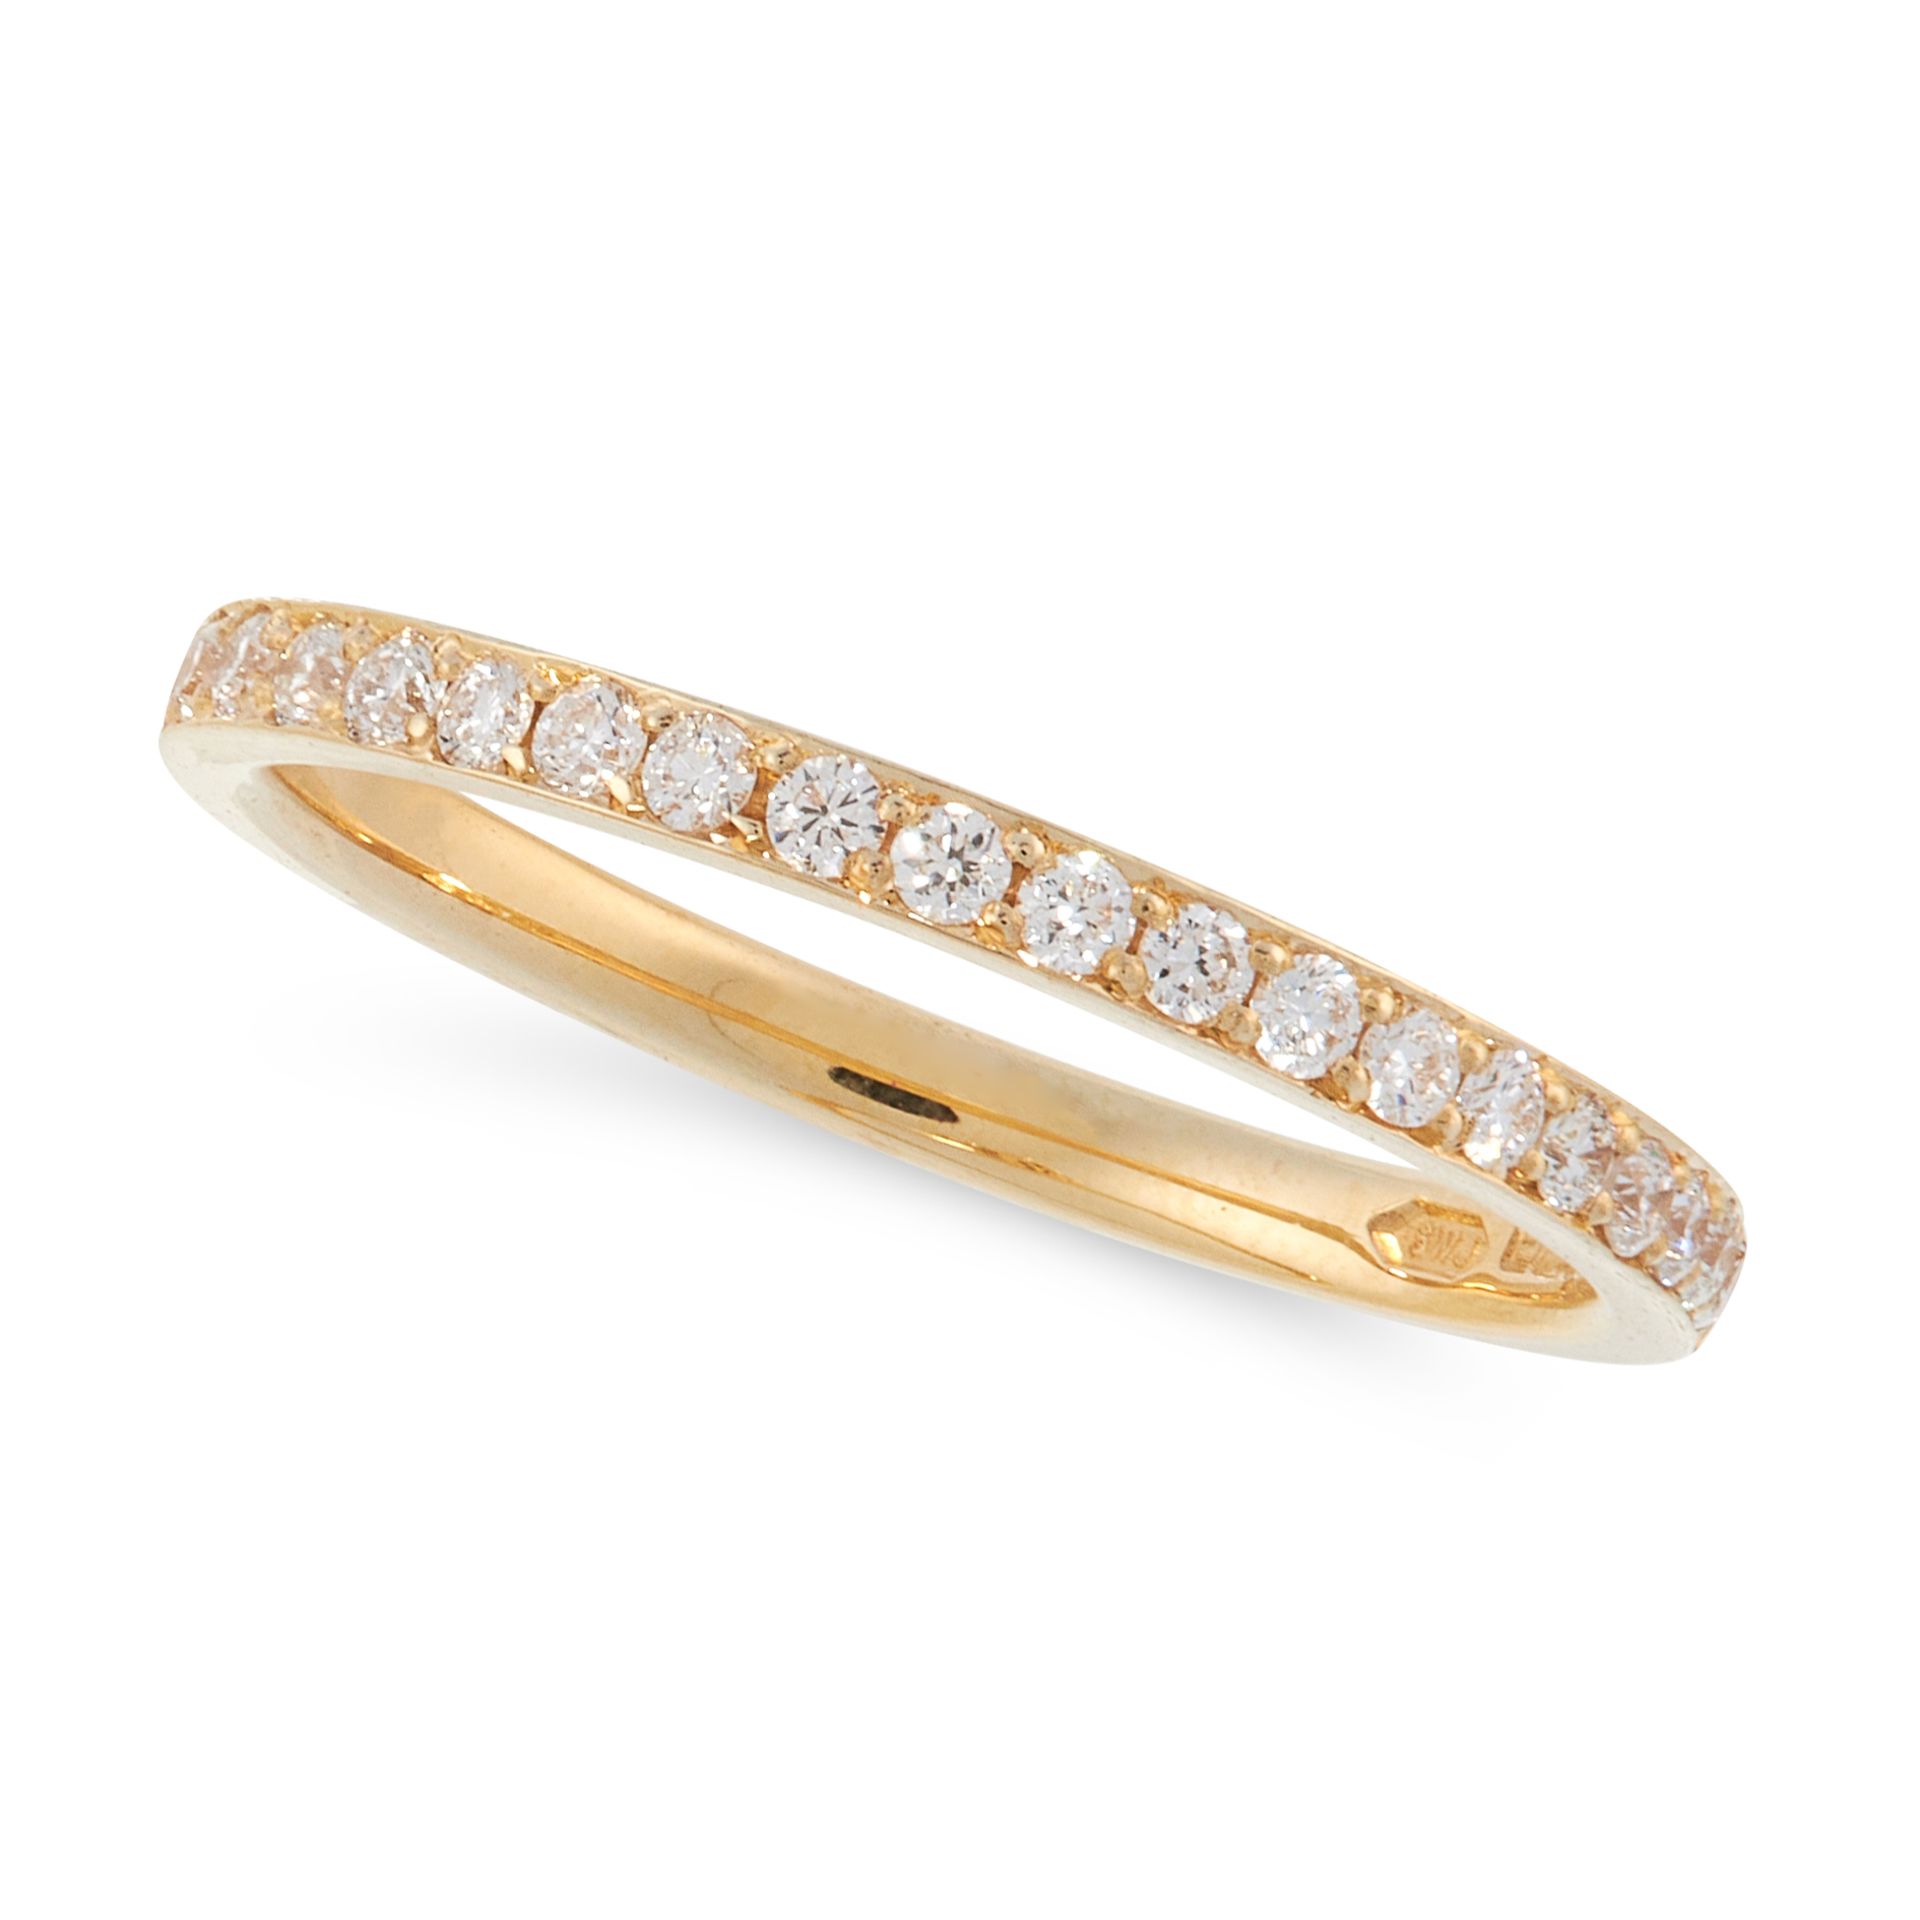 A DIAMOND HALF ETERNITY RING in 18ct yellow gold, half set with round cut diamonds, British